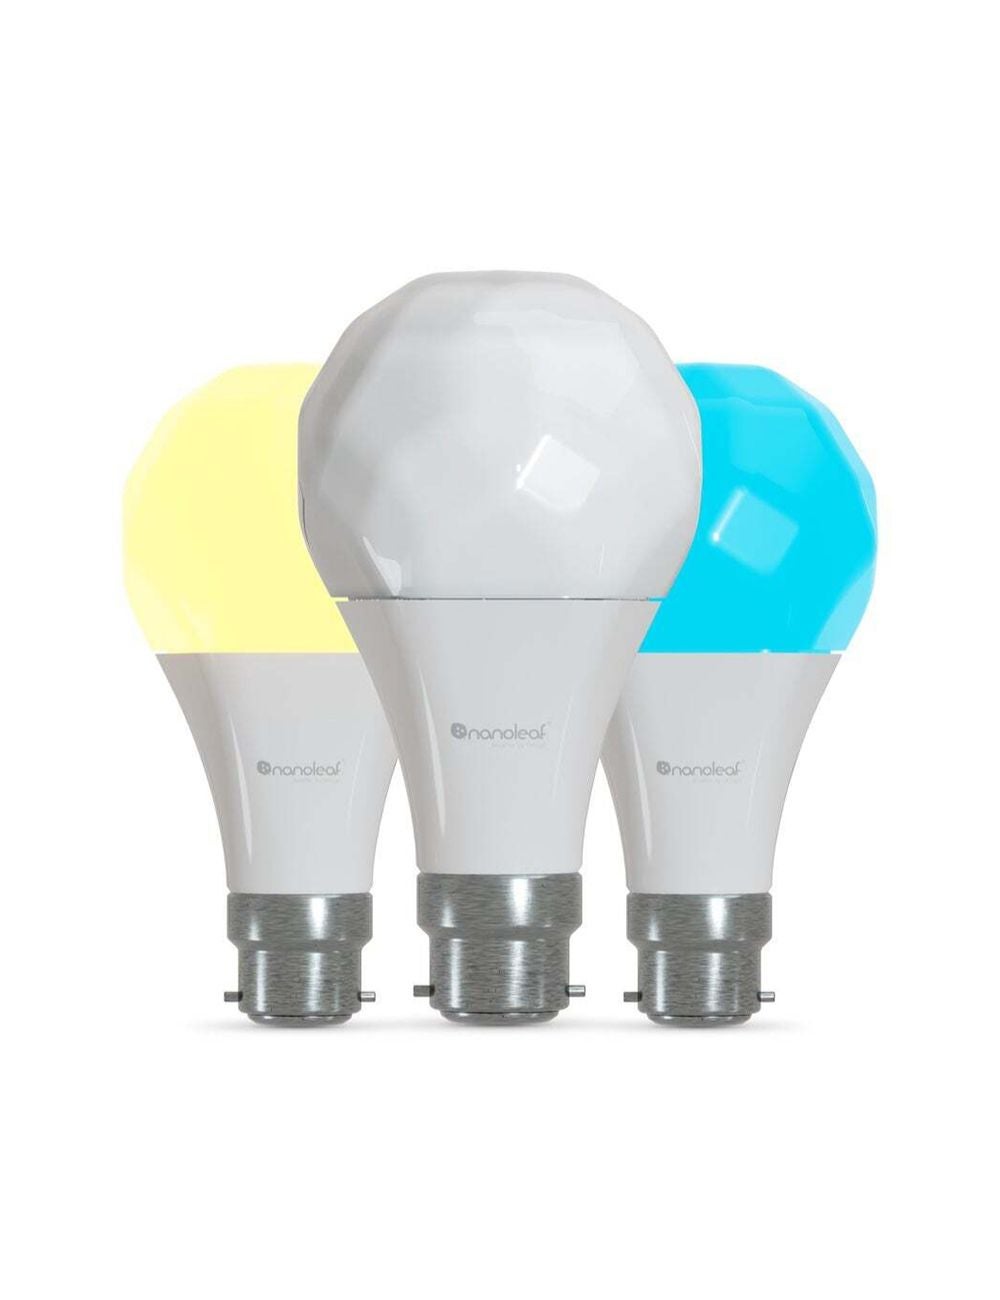 Essentials HomeKit A60, B22 Smart Bulb (Each) - NL45-0800WT240B22